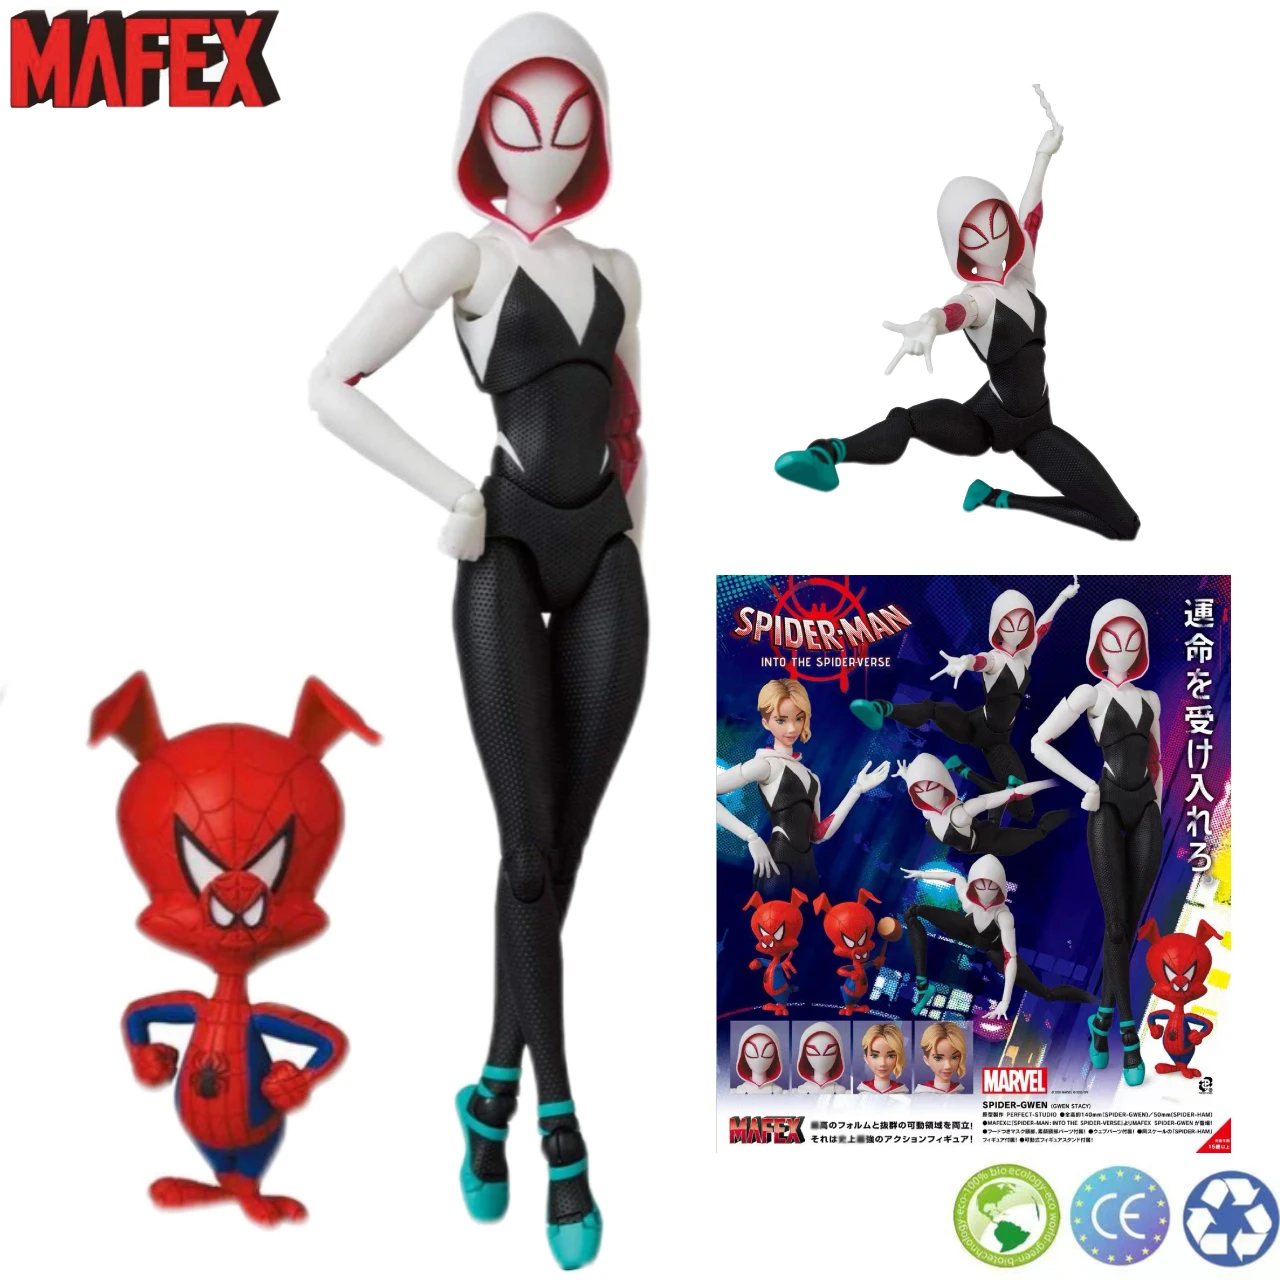 

In Stock Medicom Toy MAFEX Maffex 134 No.134 SPIDER-GWEN Spider Gwen Reissue Action Figrue Anime Model Toys Collection Gift